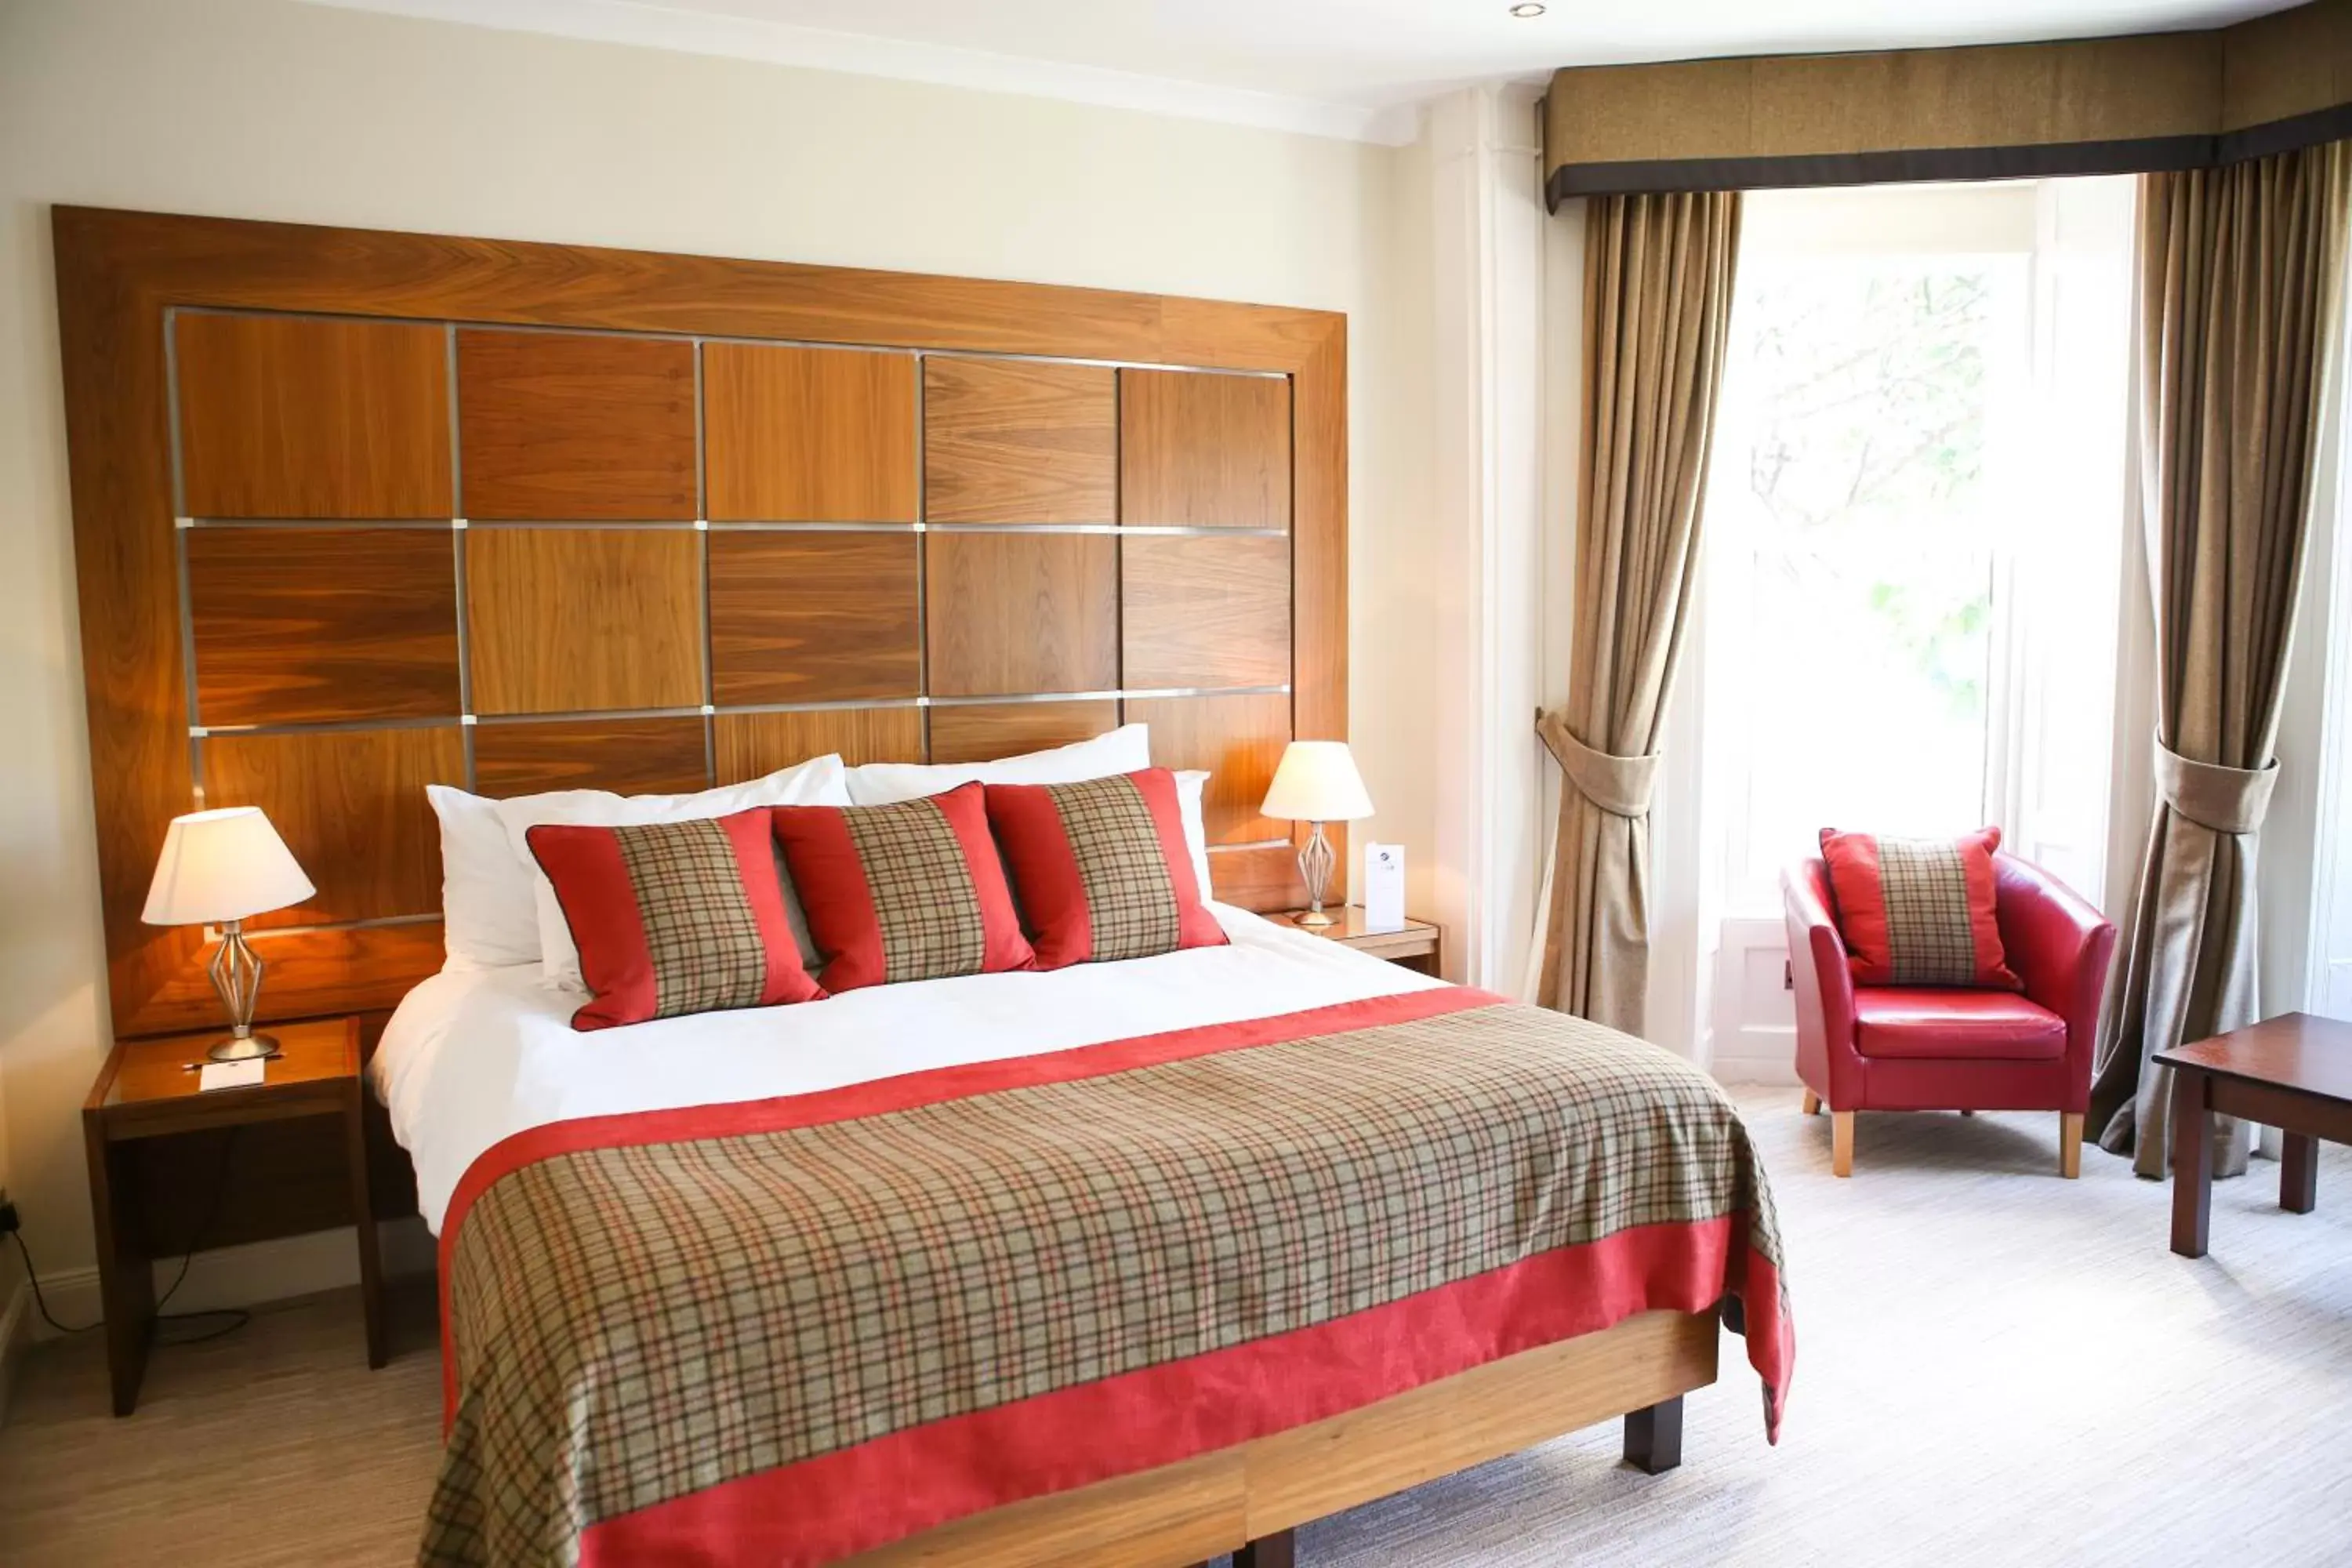 Bedroom, Room Photo in The Glenmoriston Townhouse Hotel